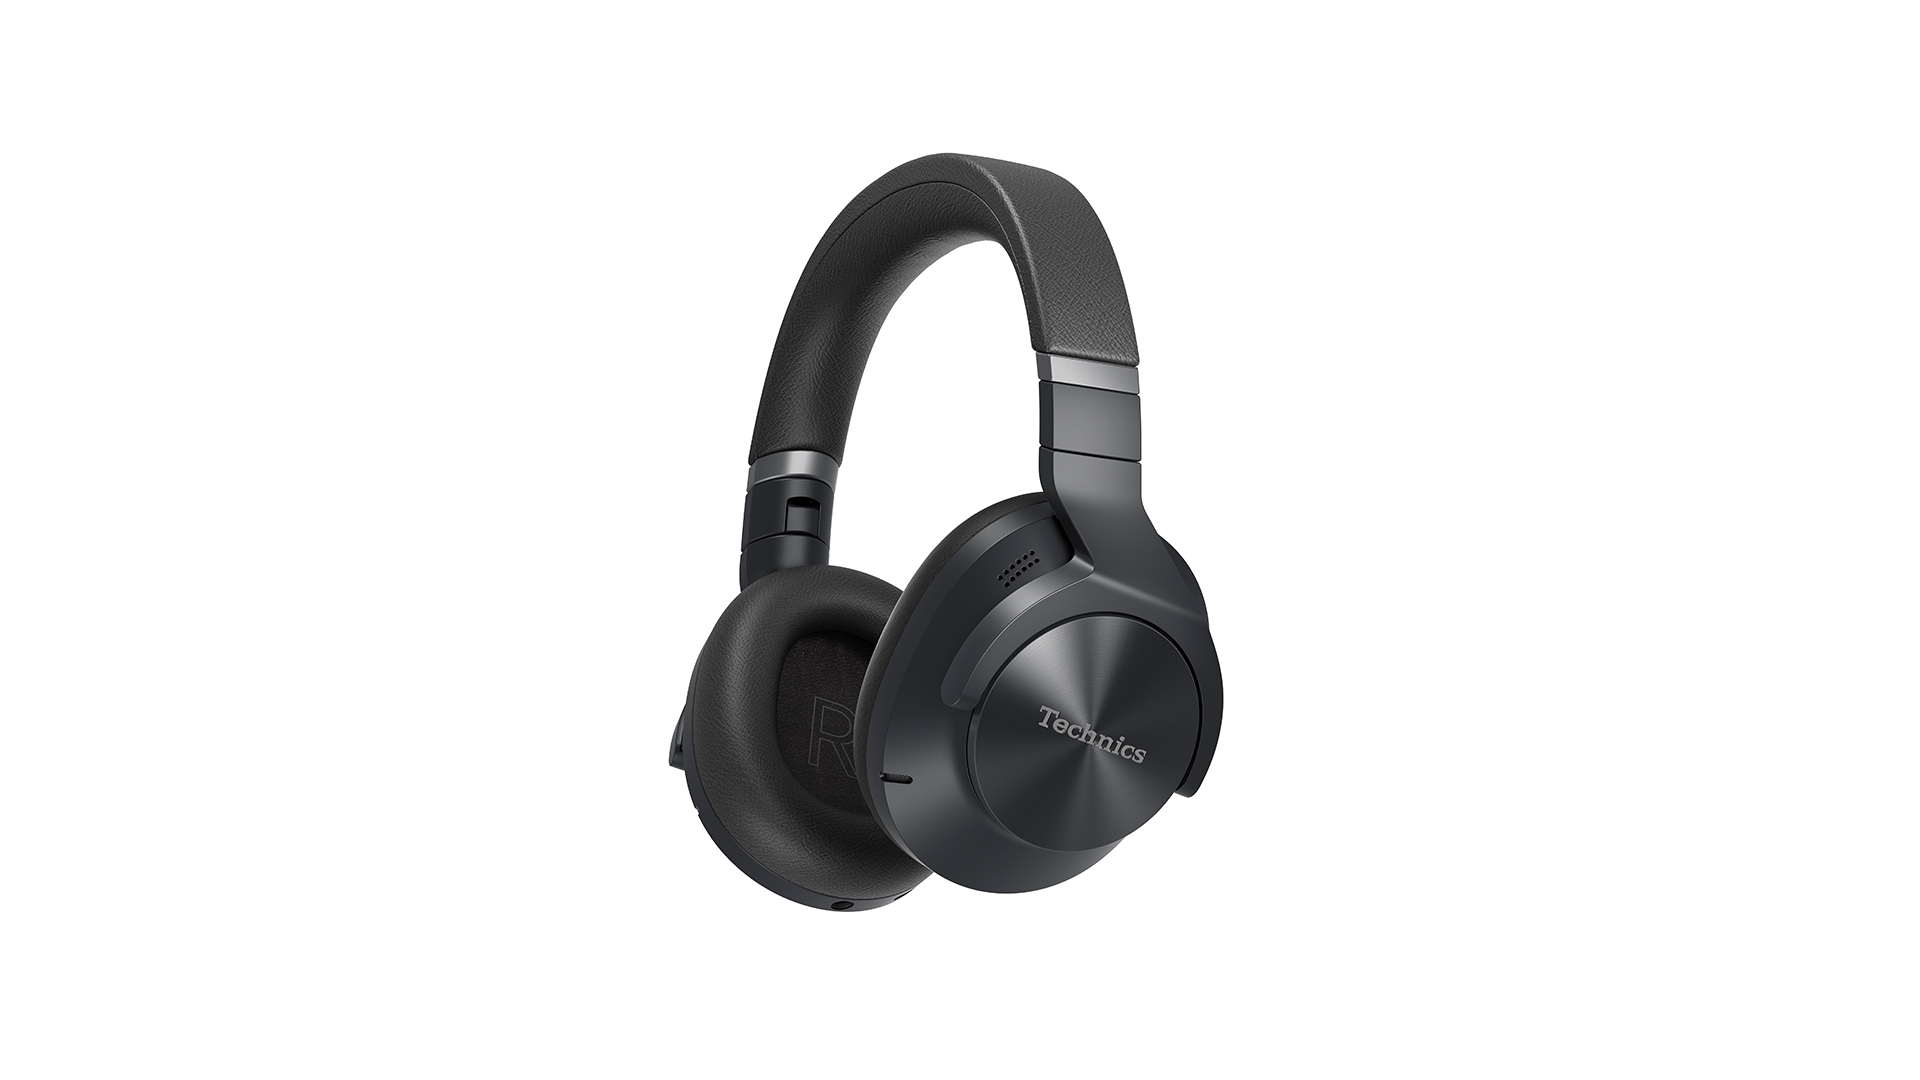 Technics EAH-A800 wireless noise-cancelling headphones review